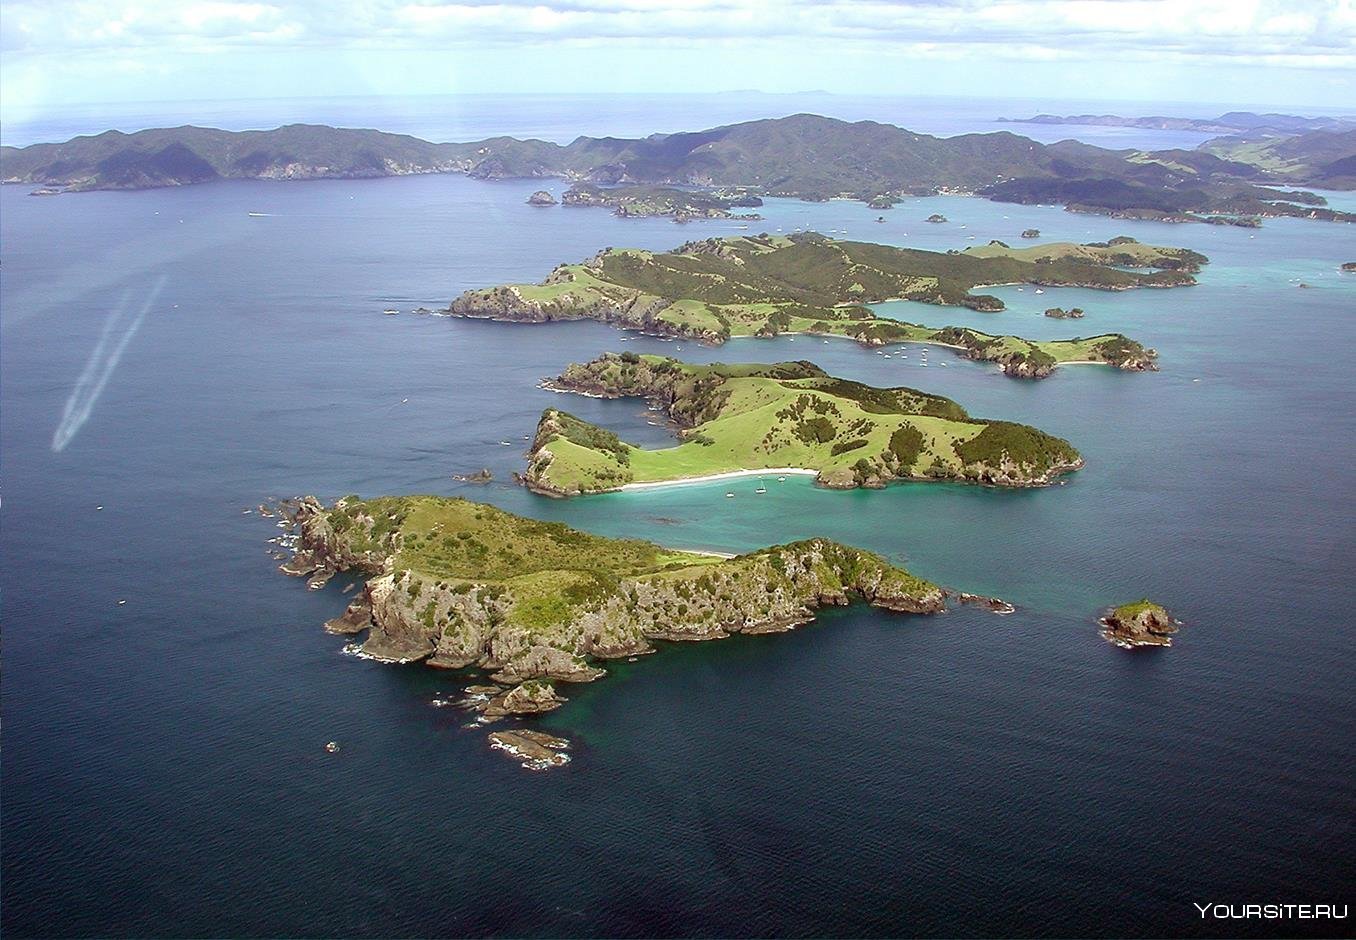 N island. Окленд Айленд остров. Новая Зеландия (острова новая Зеландия). Новозеландские субантарктические острова.